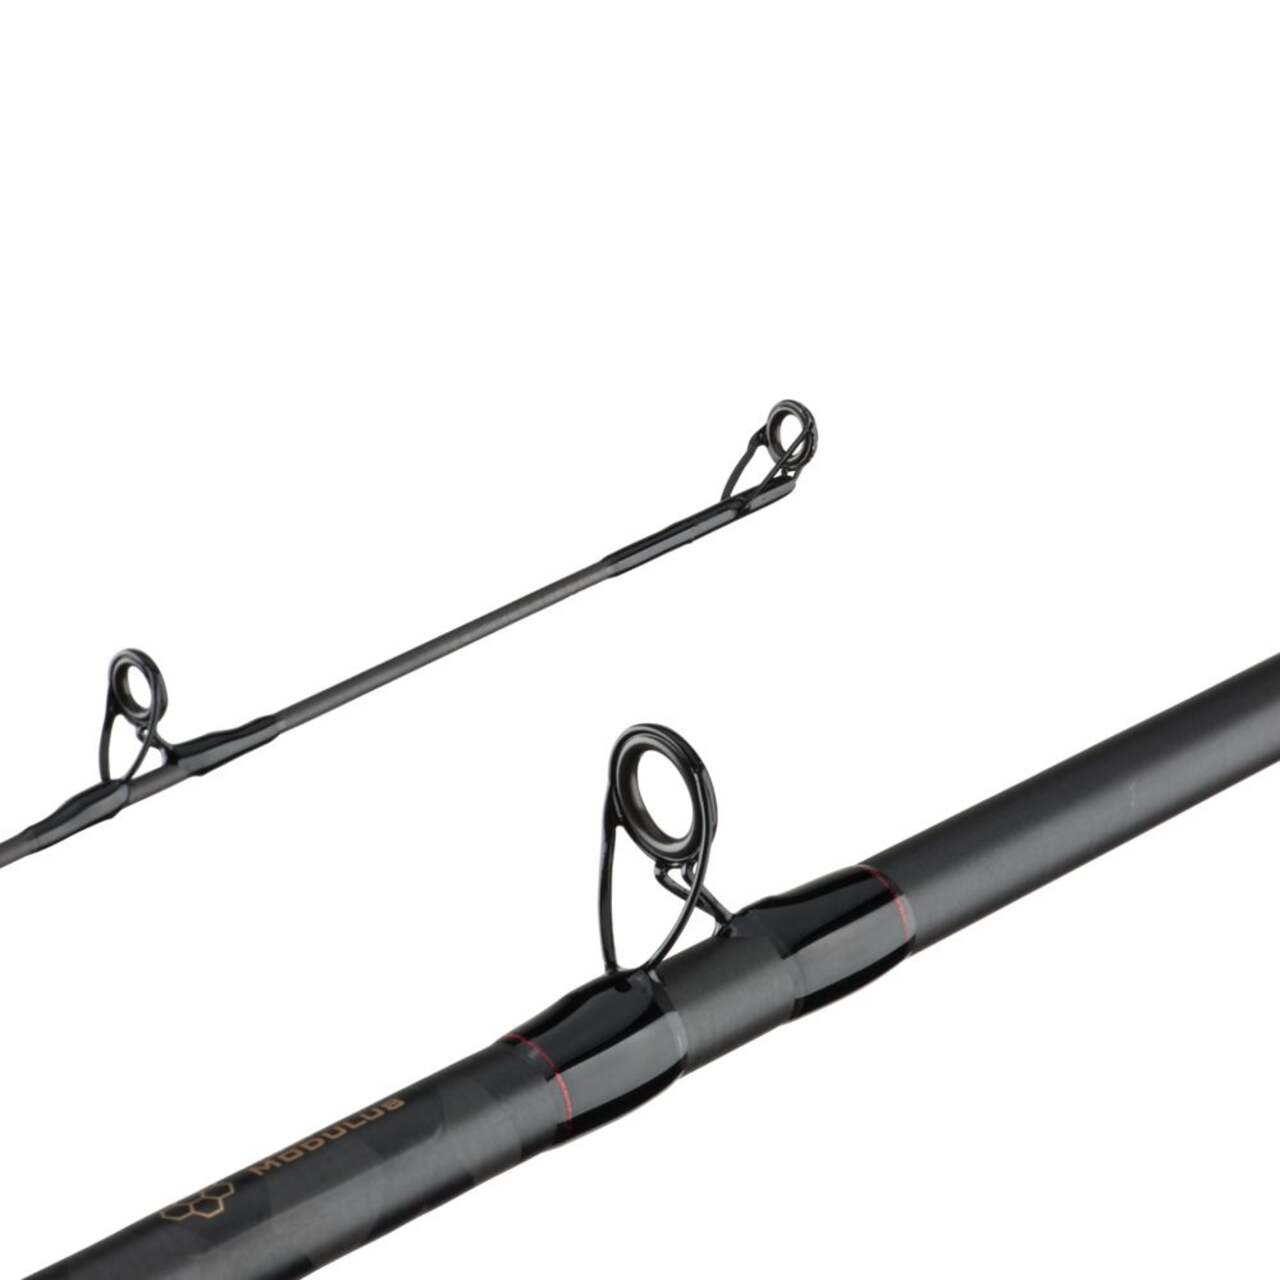 Buy Full Metal Fishing Rod online